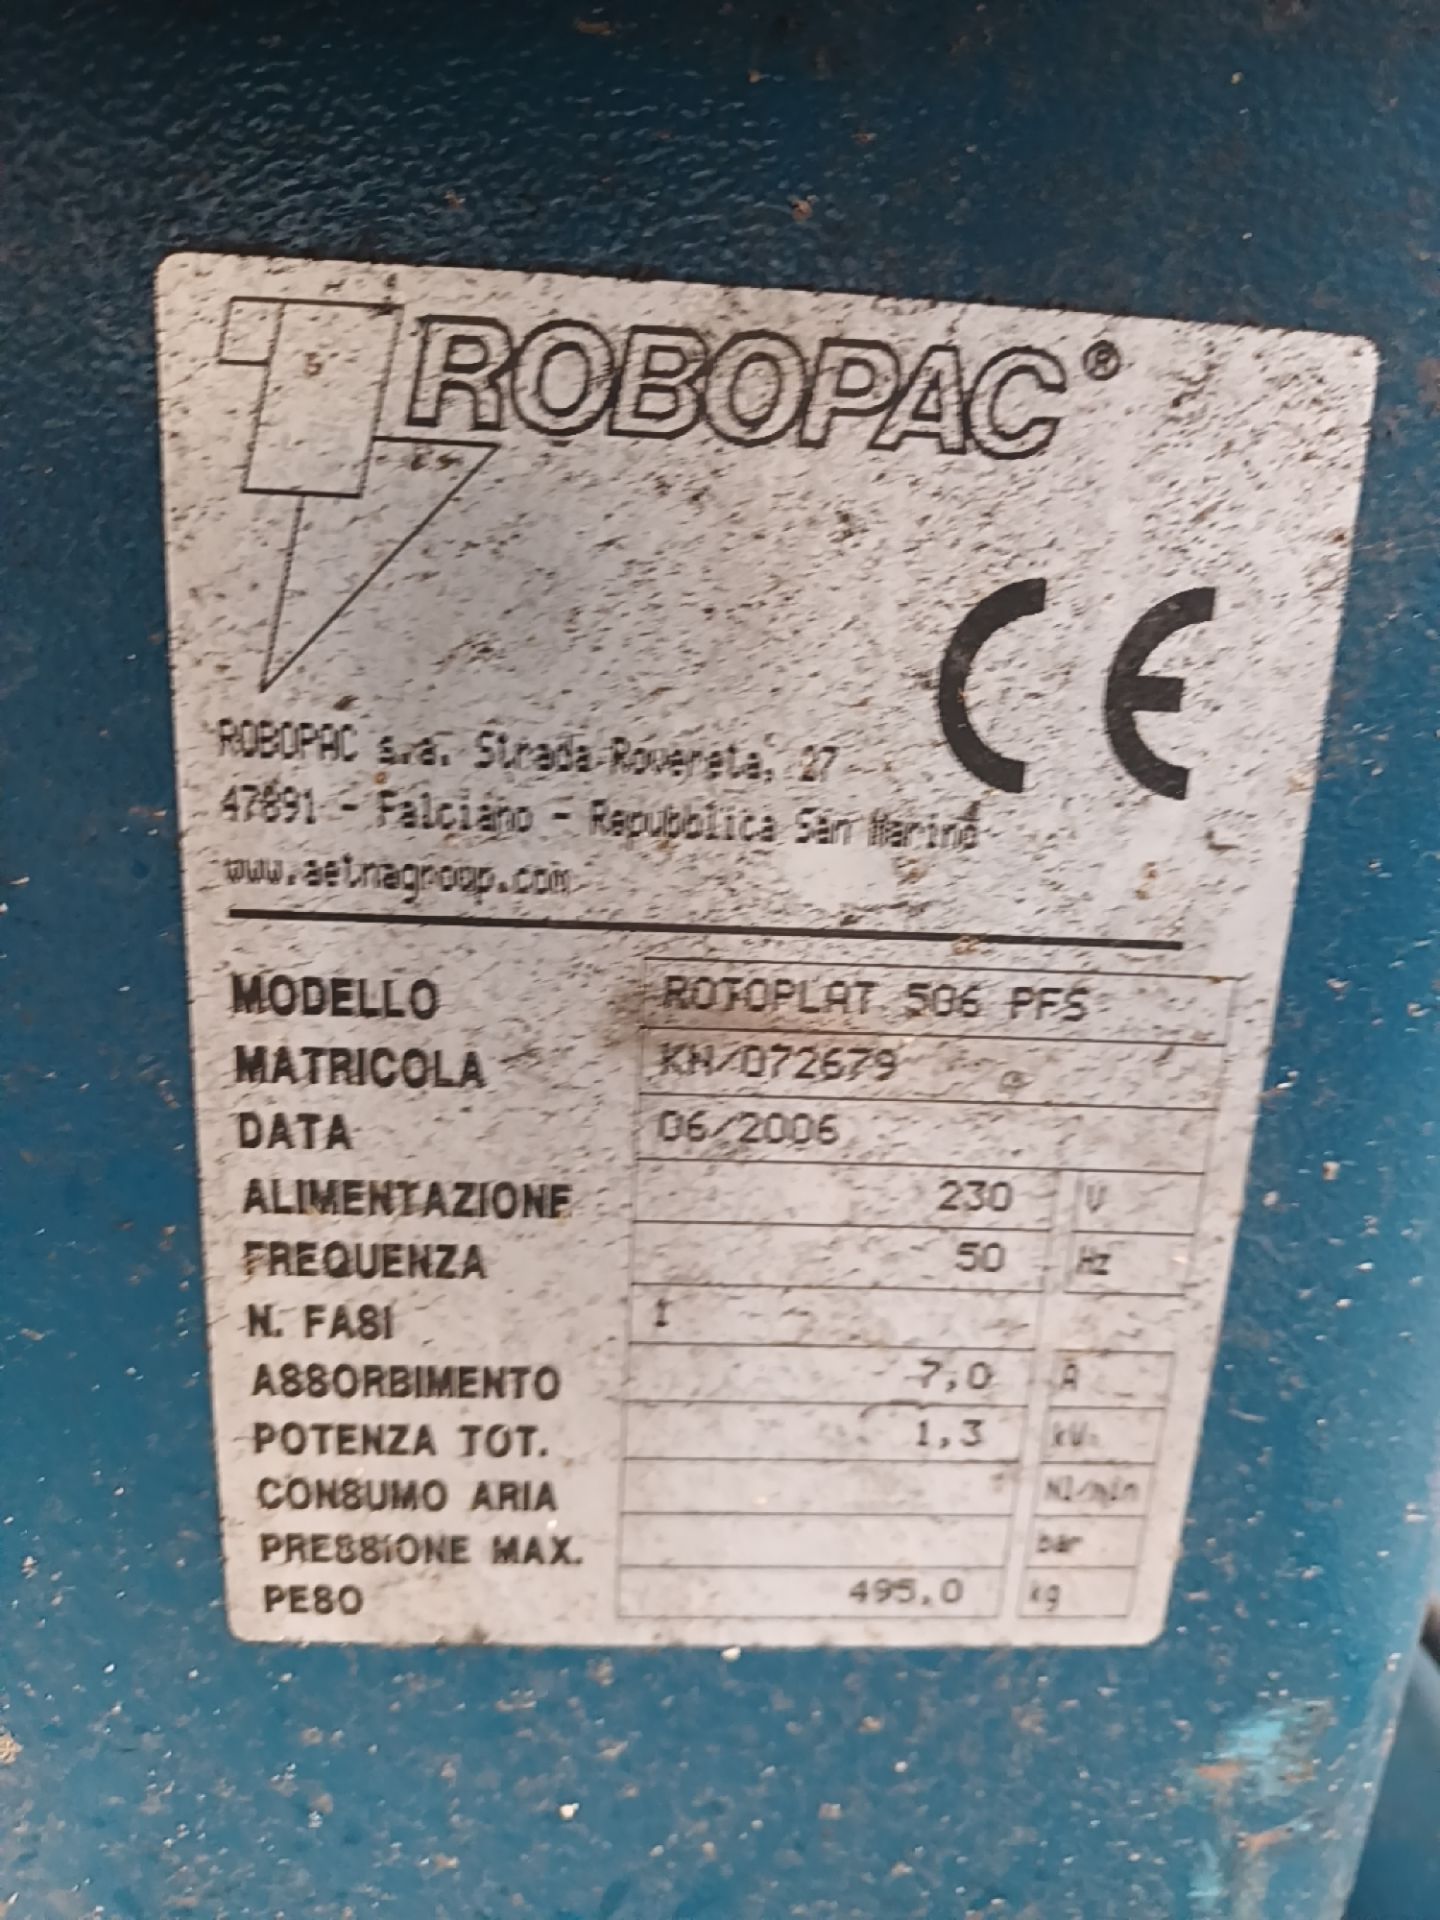 ROBOPAC shrink pallet wrapper (2006), model ROTOPLAT 506 PFS, Serial No. KN/072679 - Image 4 of 6